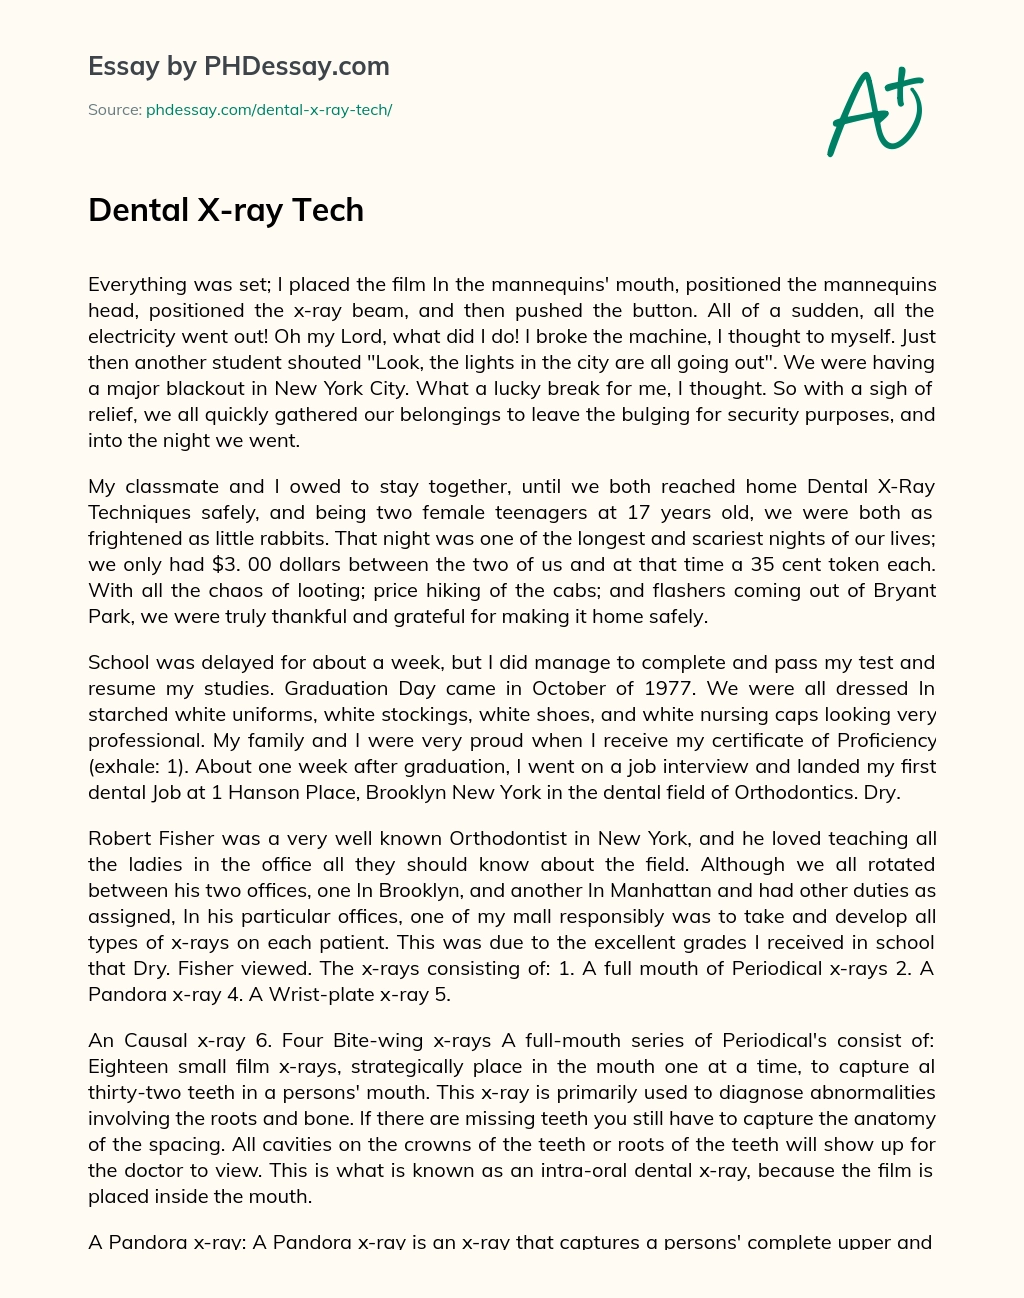 Dental X-ray Tech essay